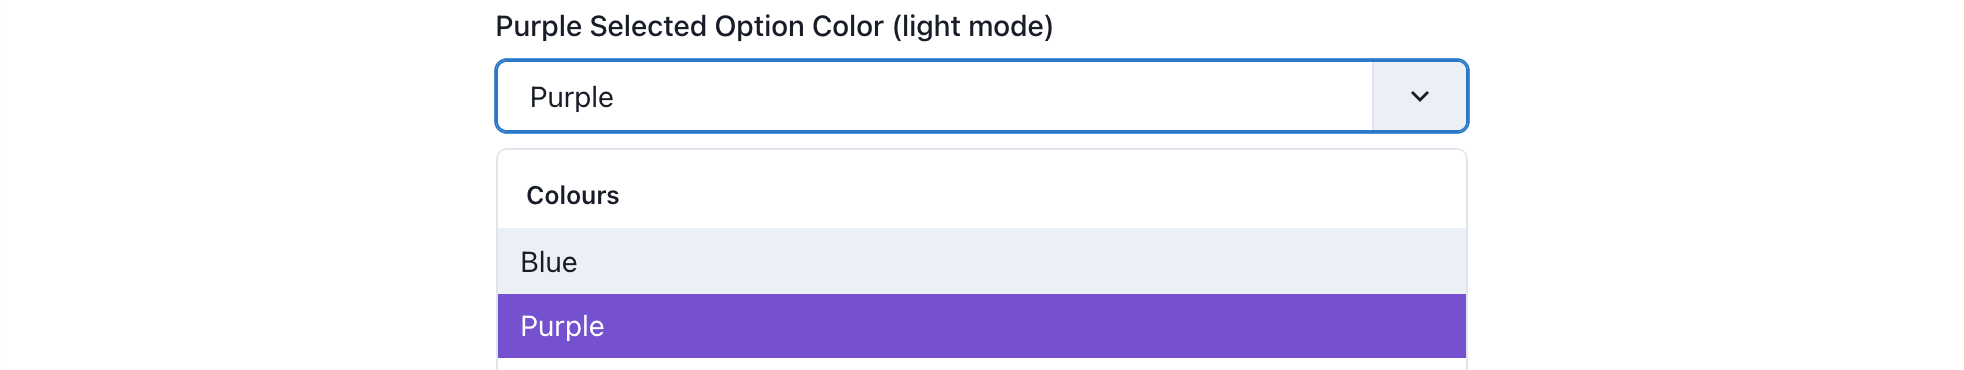 Purple Selected Option Color (light mode)